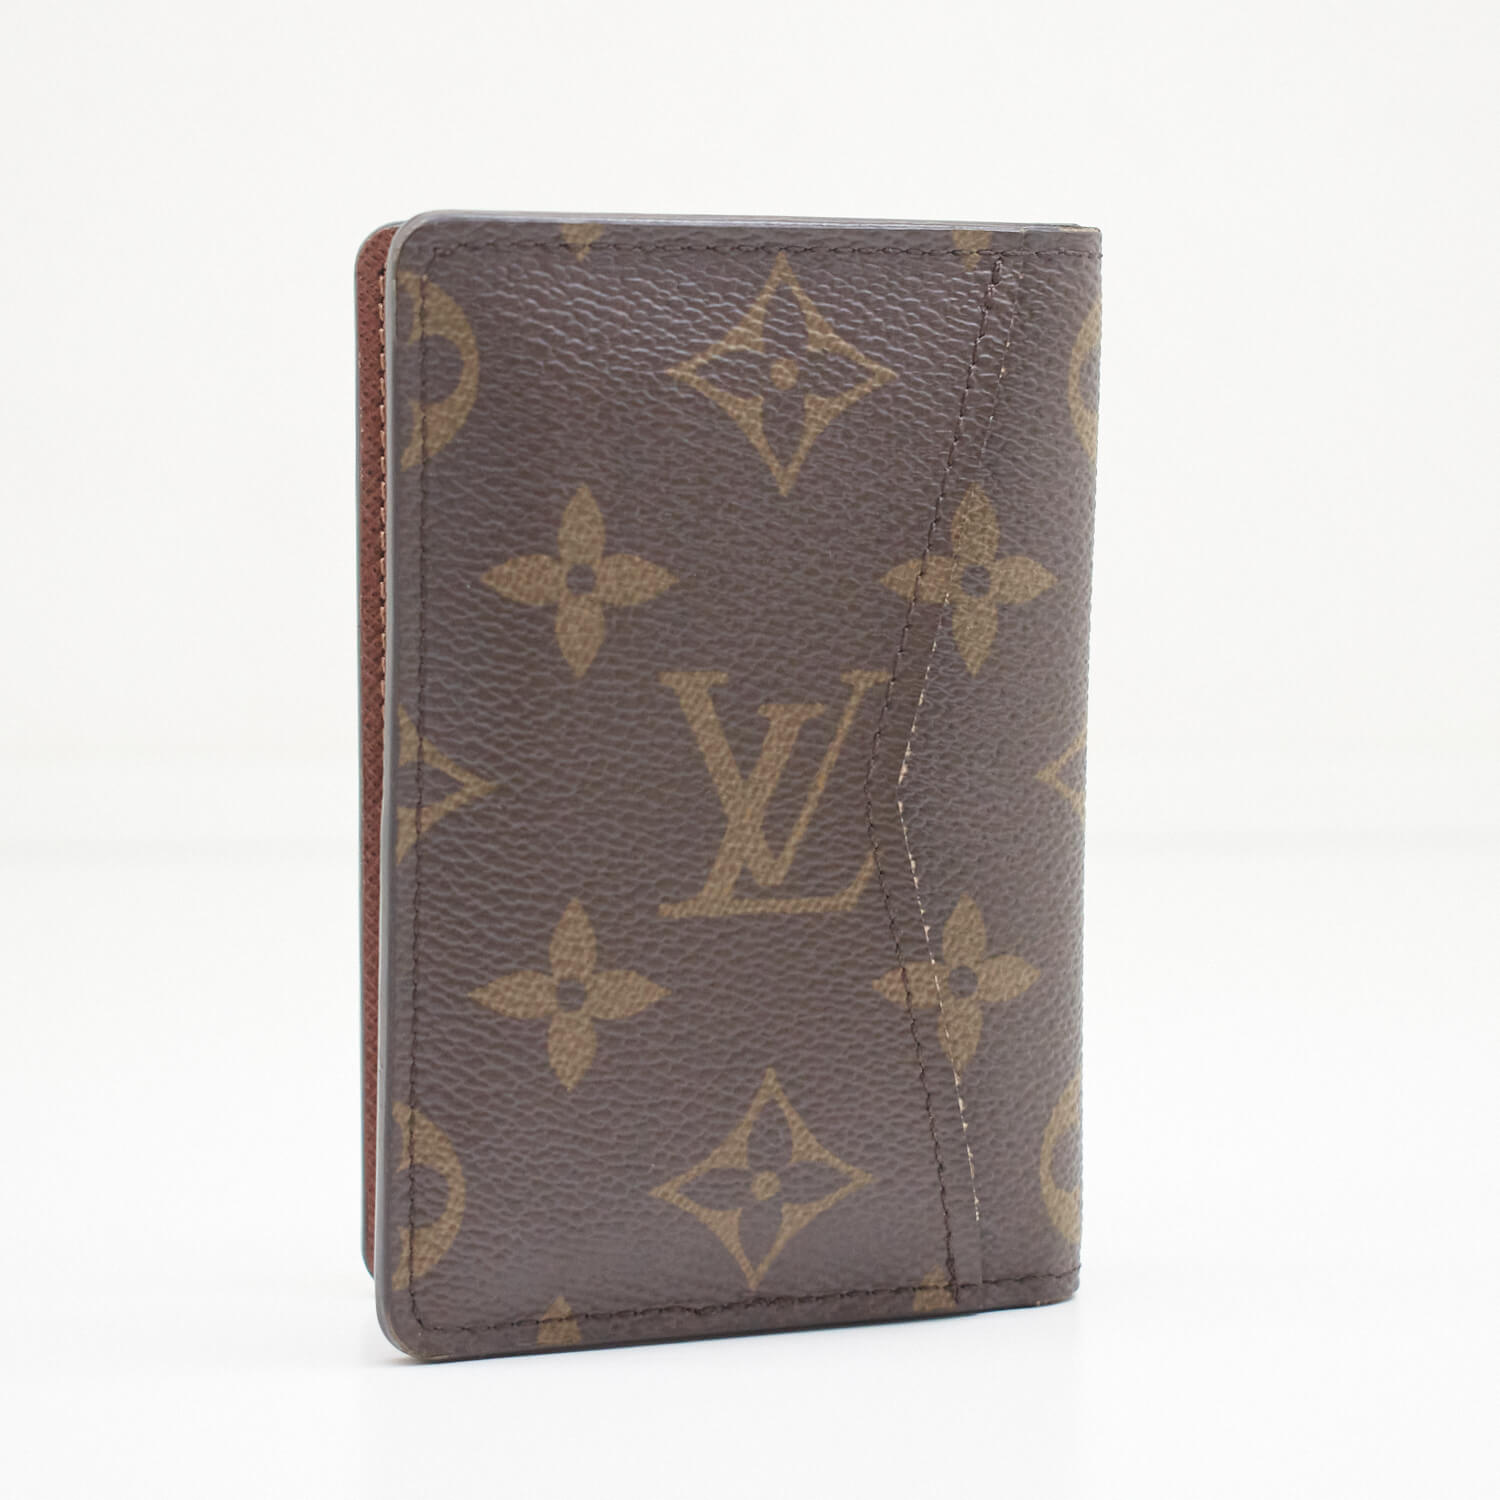 Louis Vuitton Kartenetui / Geldbörse